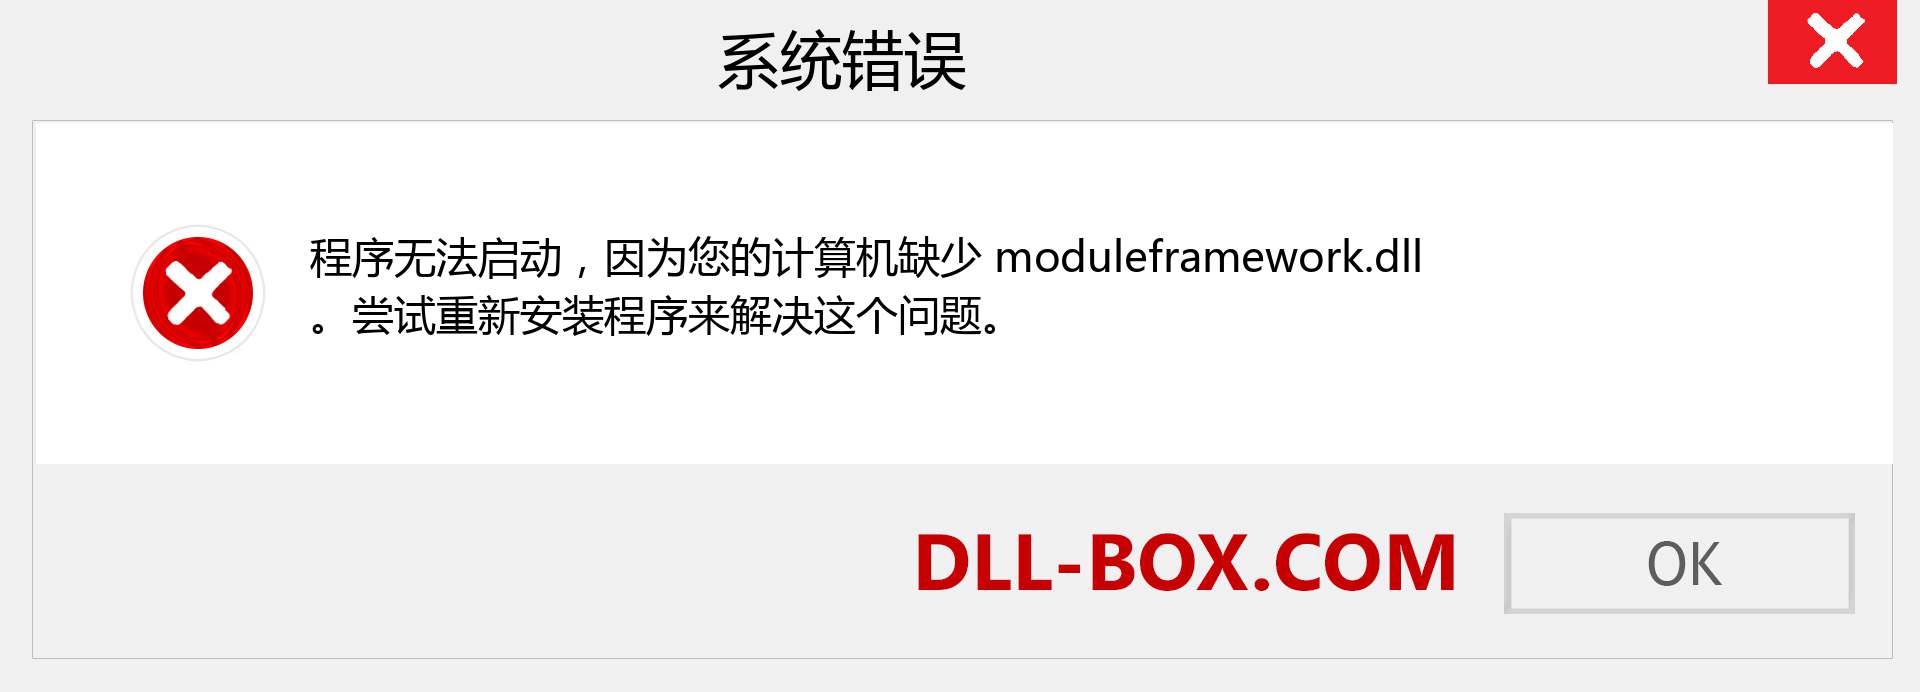 moduleframework.dll 文件丢失？。 适用于 Windows 7、8、10 的下载 - 修复 Windows、照片、图像上的 moduleframework dll 丢失错误